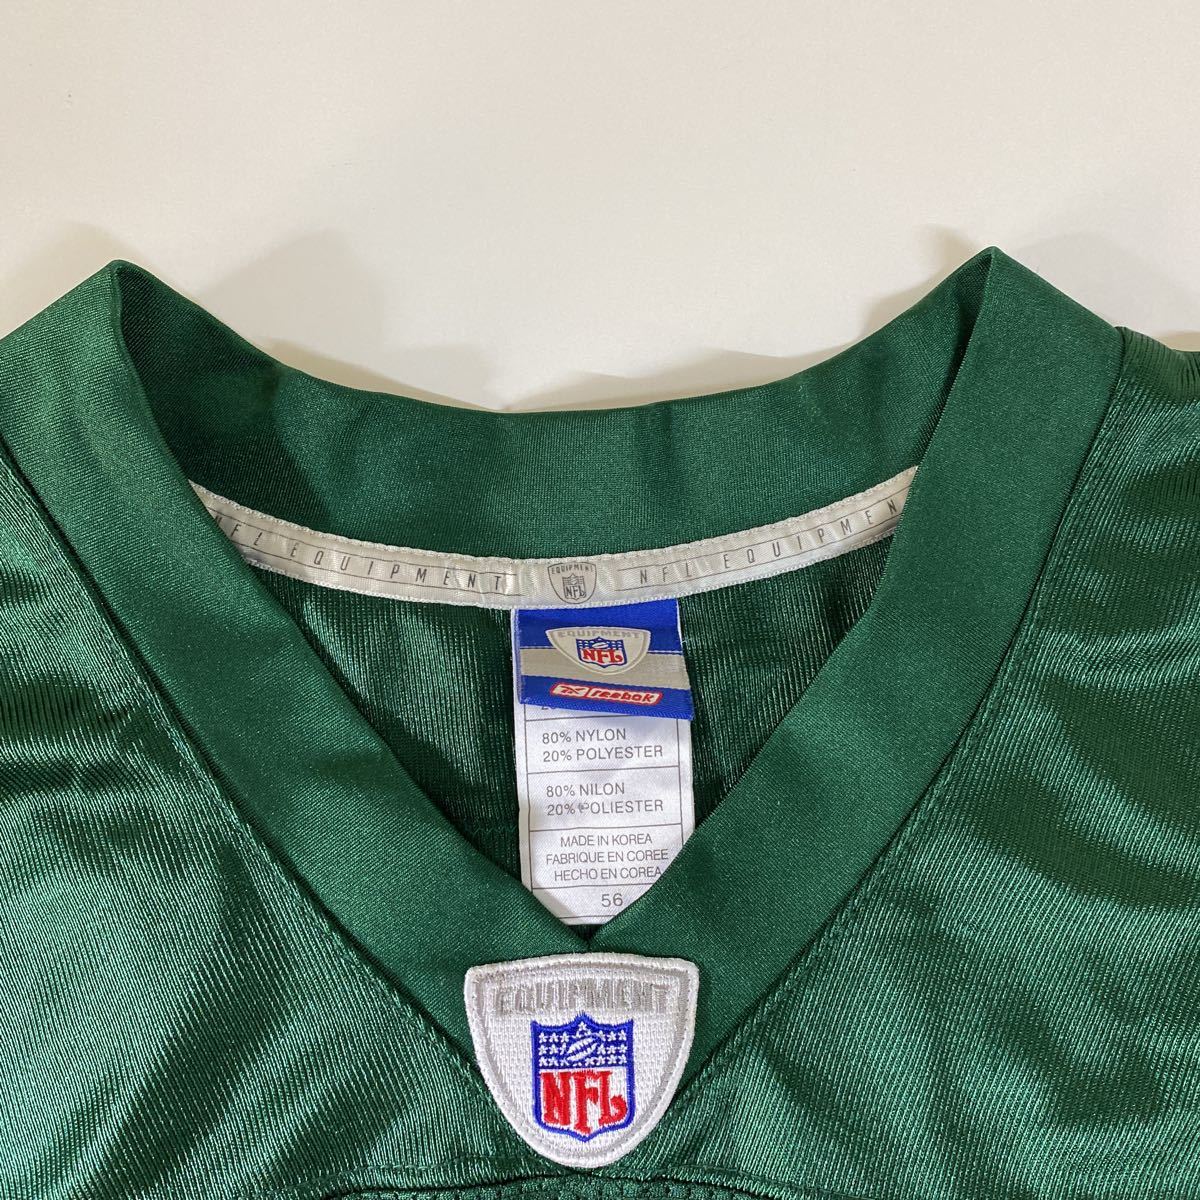 NFL Reebok リーボック ゲームシャツ アメフト アメリカンフットボール ユニフォーム NY JETS 56 古着 4 McDONALD